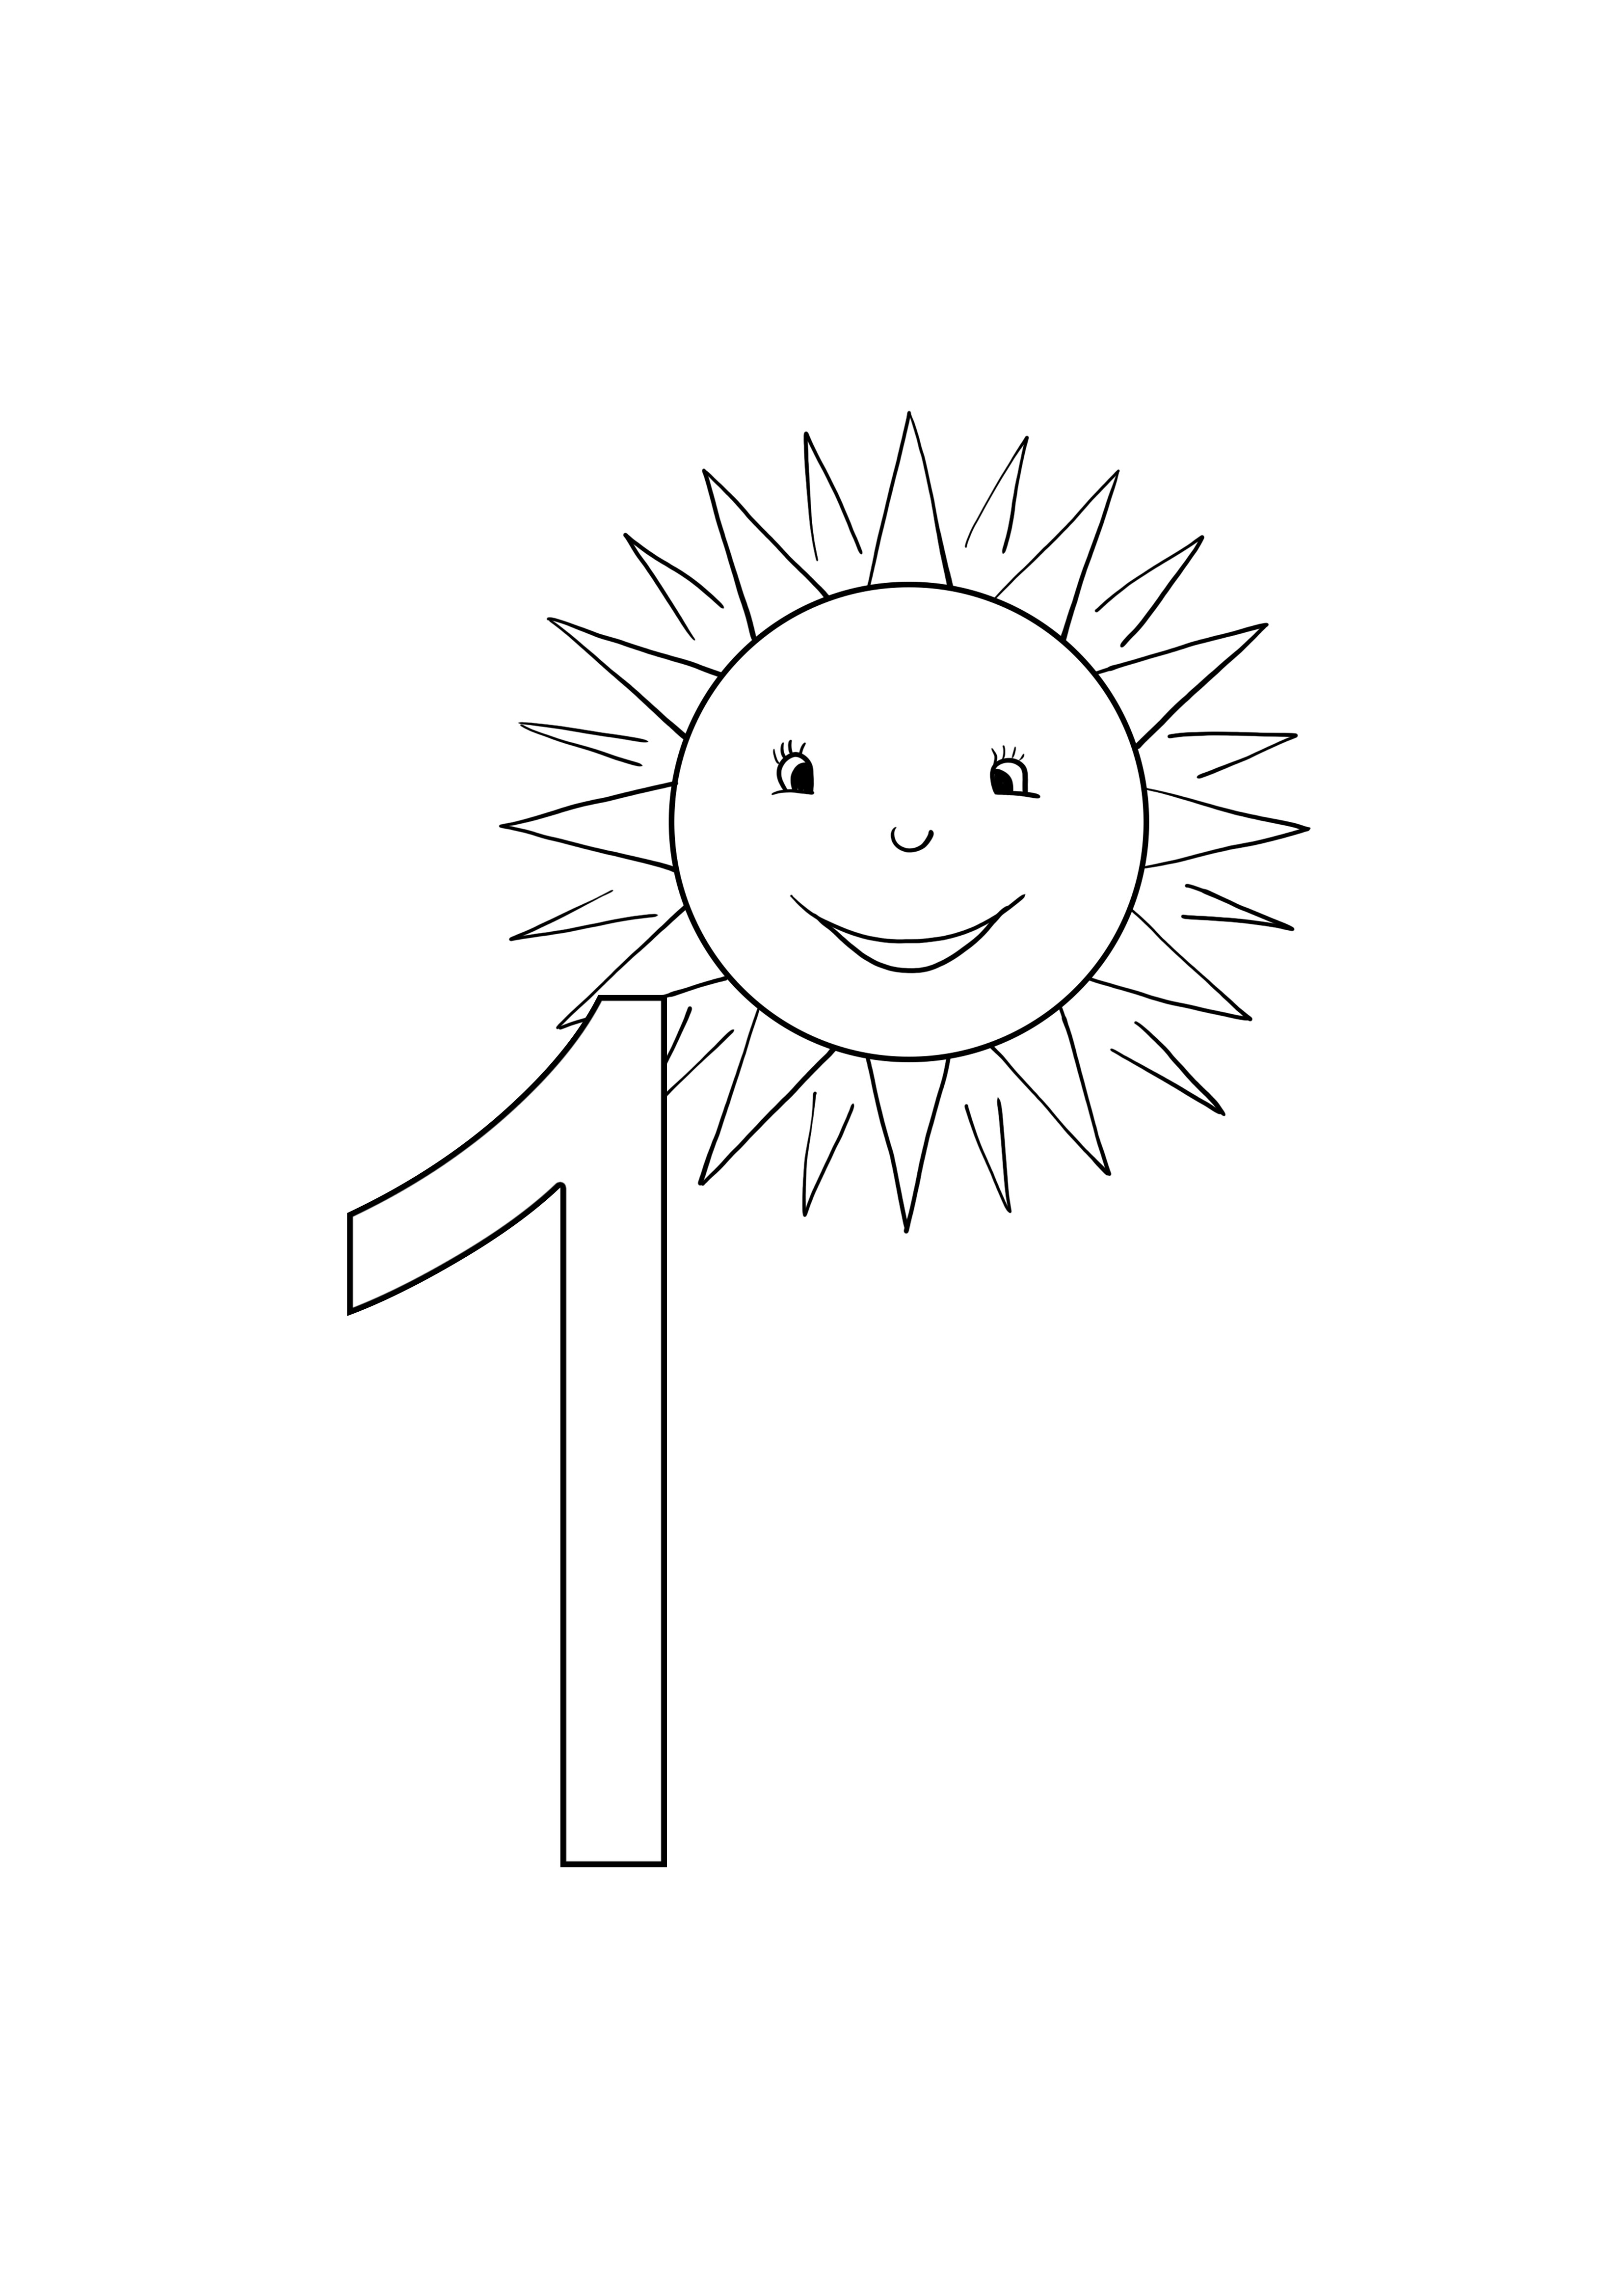 satu halaman nomor pencetakan bebas matahari